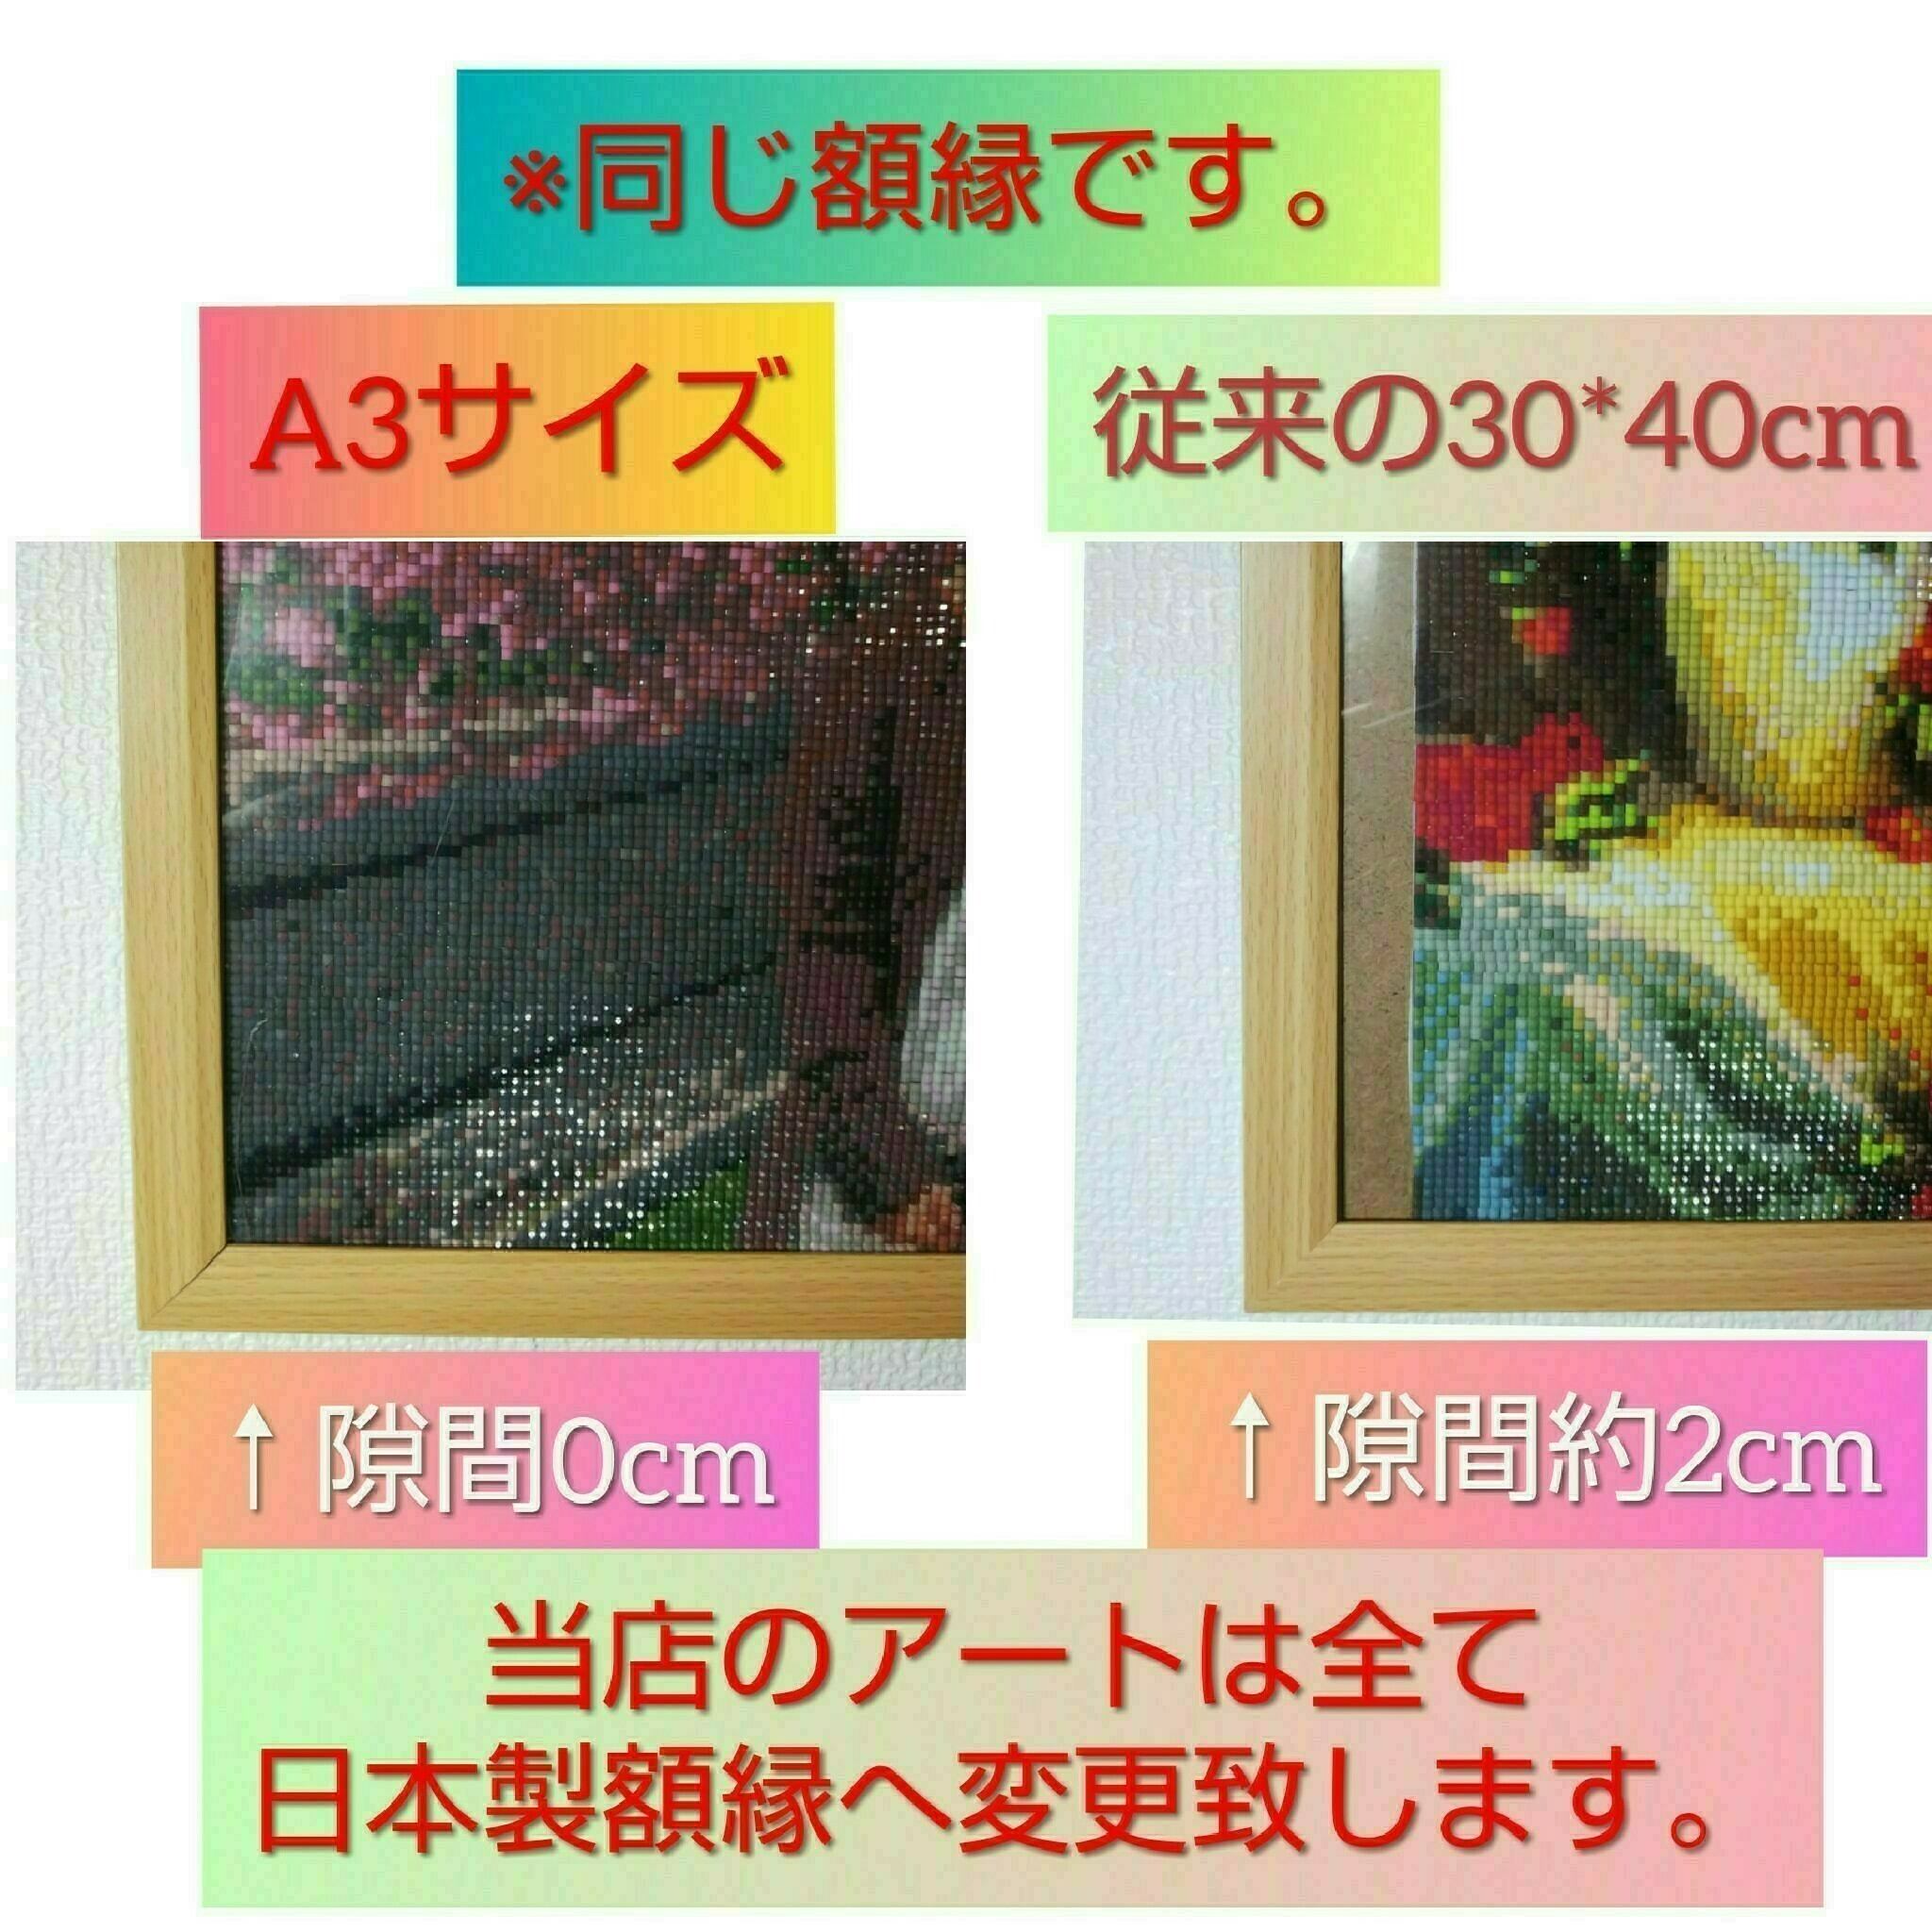 A3サイズ 四角ビーズ【fan-010】フルダイヤモンドアート